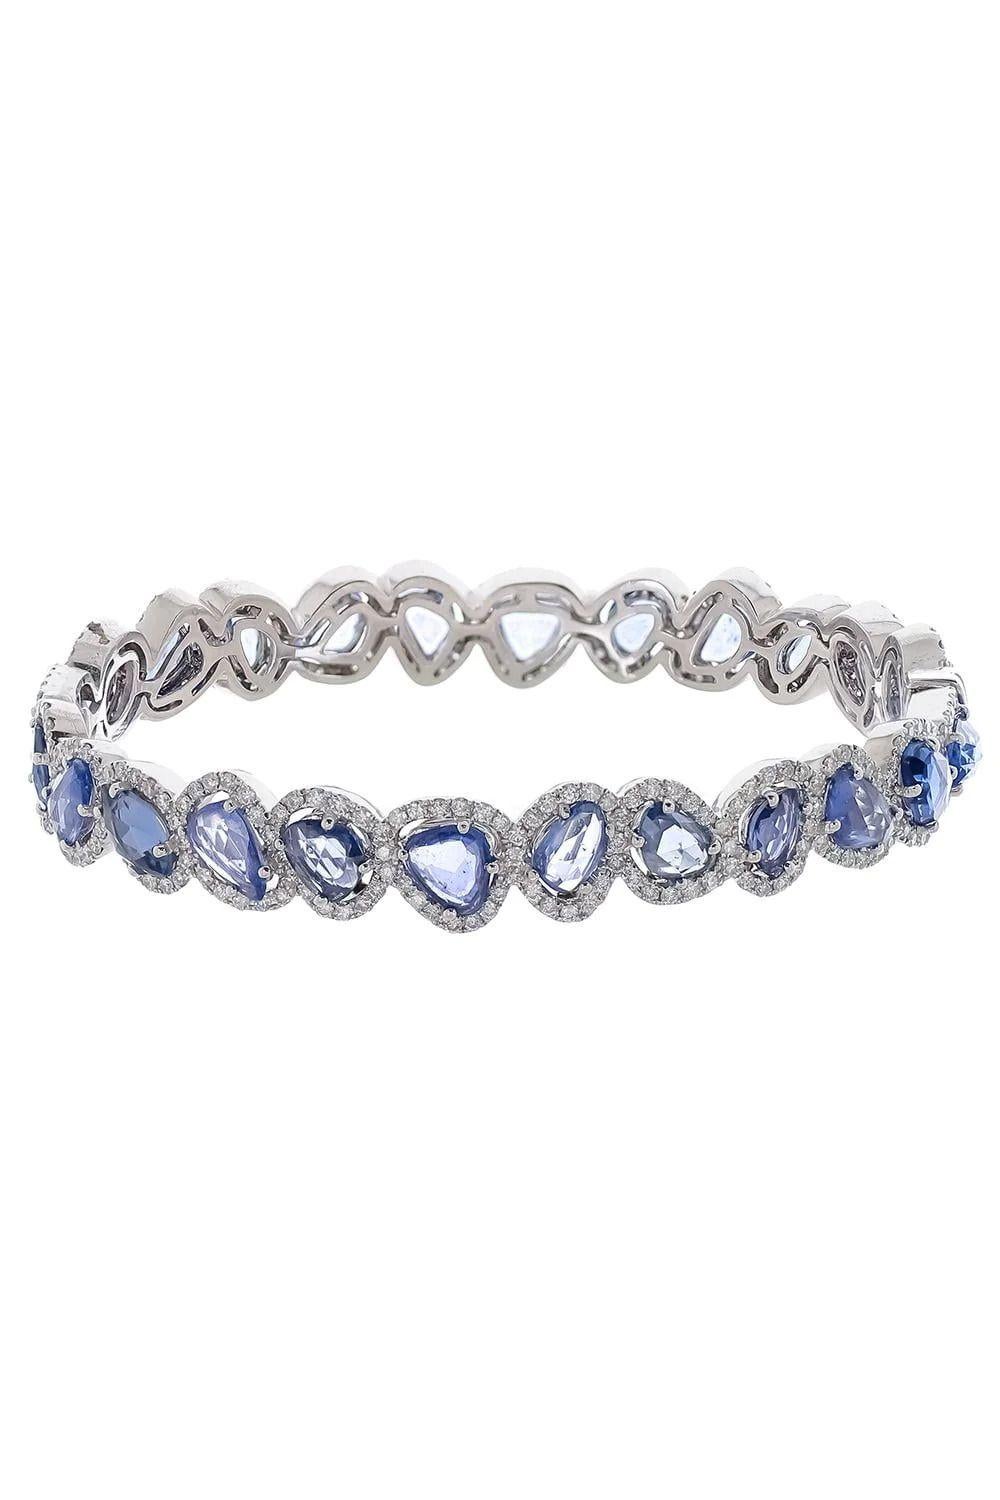 Rose Cut Diana M 13.03cts Sapphire & 3.00cts Diamond Bangle For Sale